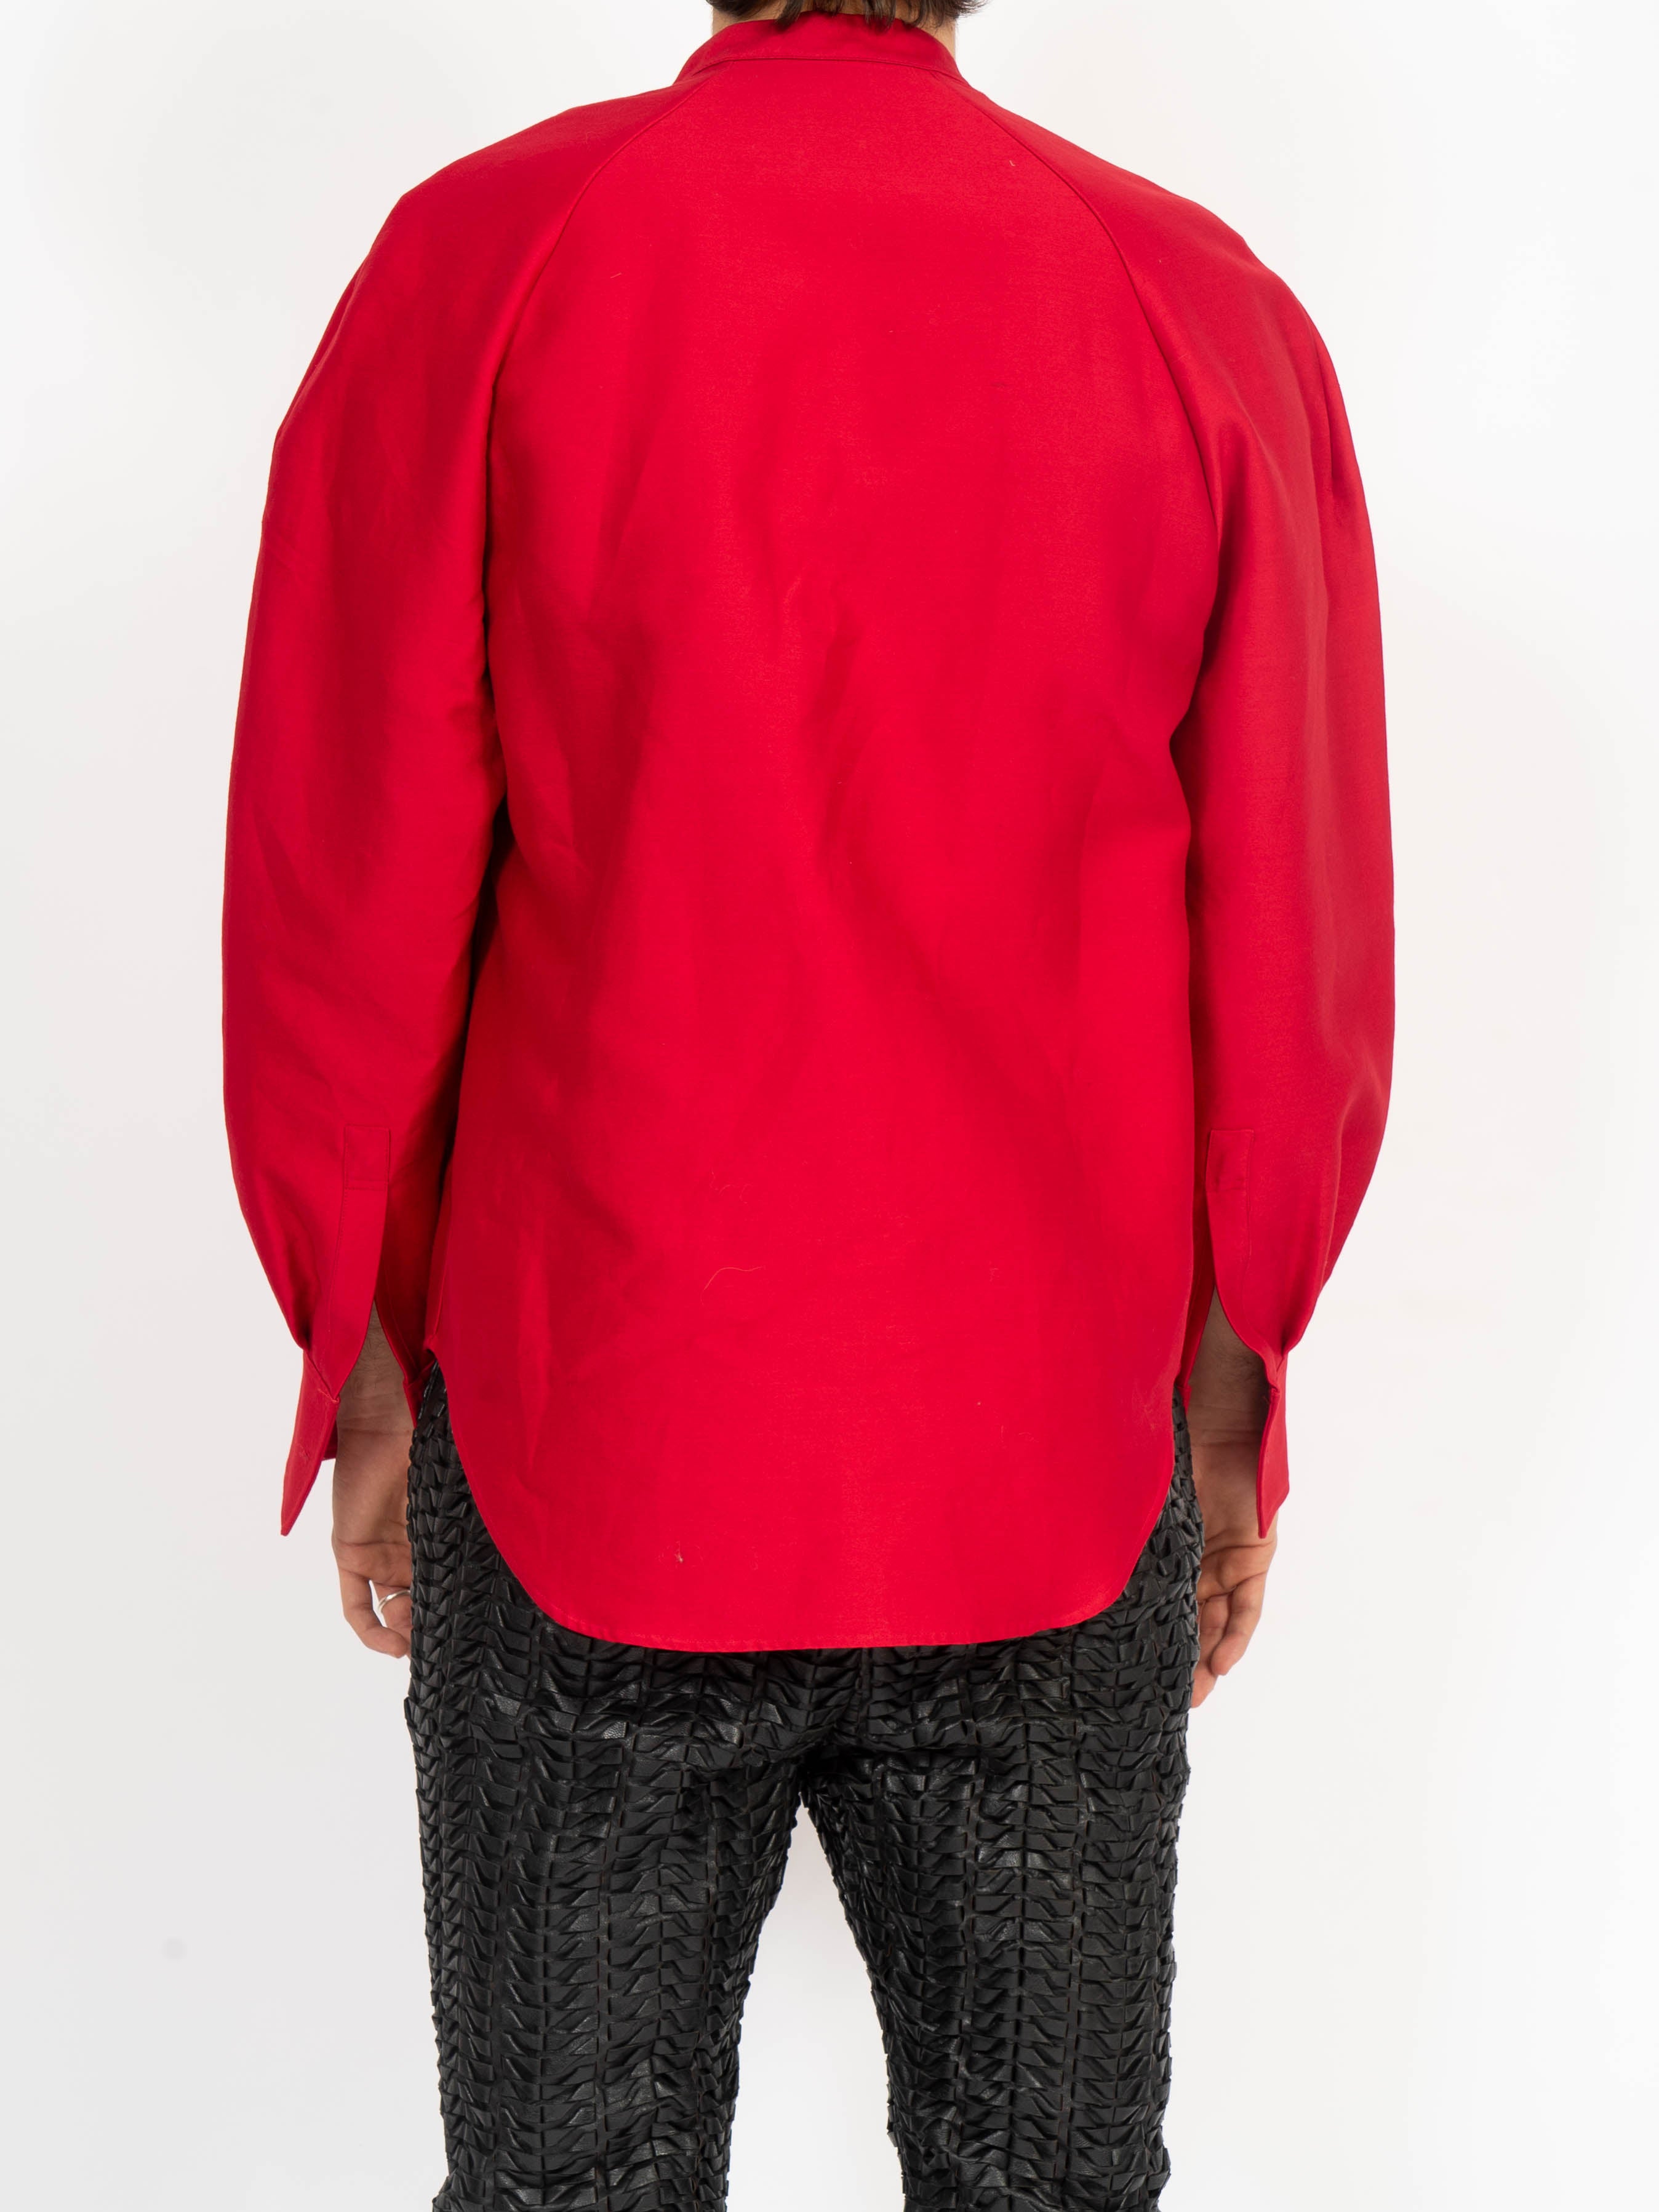 FW19 Red Drape Shirt